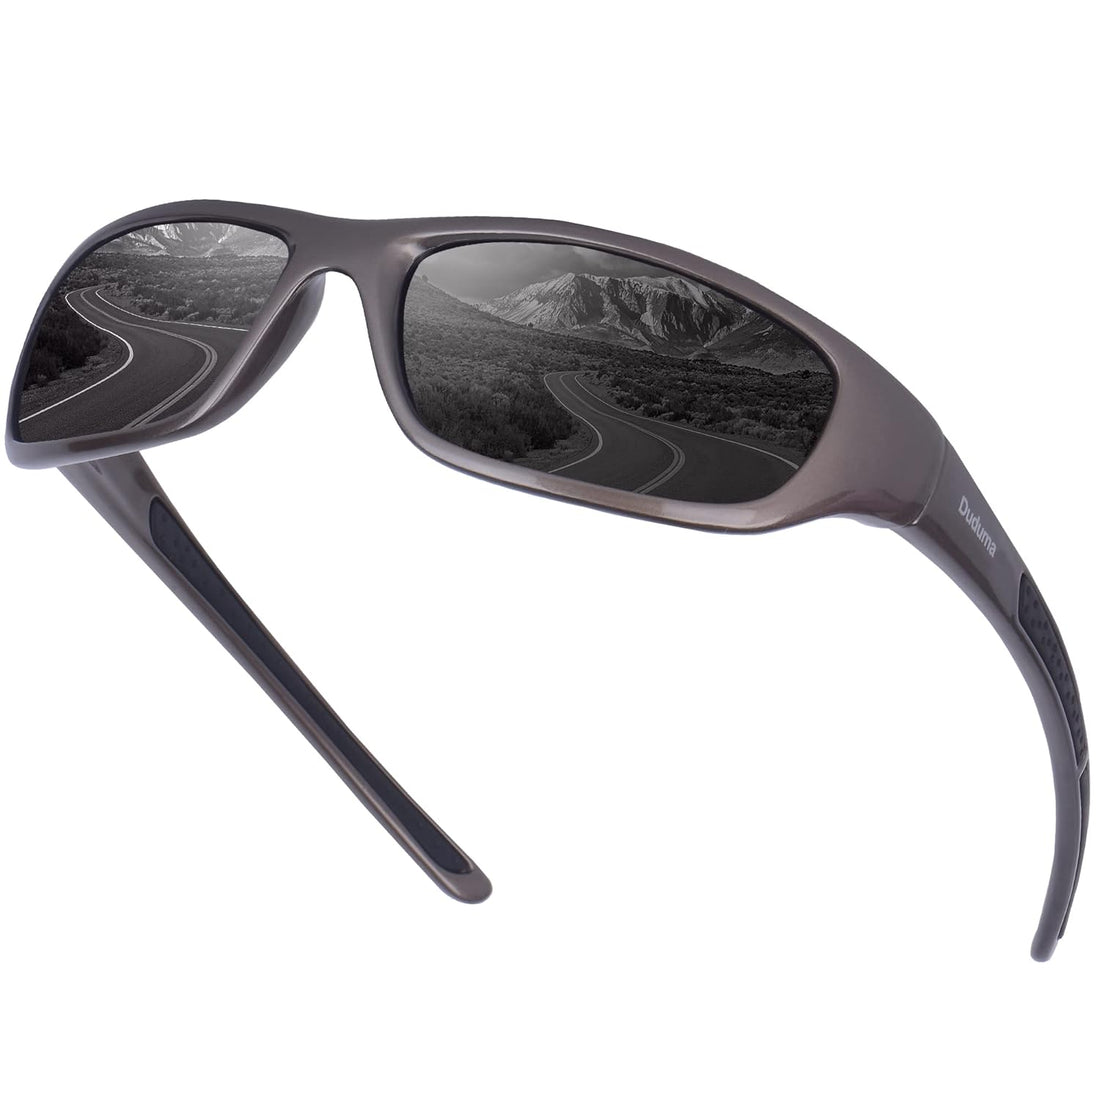 Duduma Tr8116 Polarized Sports Sunglasses for Baseball Cycling Fishing Golf Superlight Frame Silver gray frame with black lens